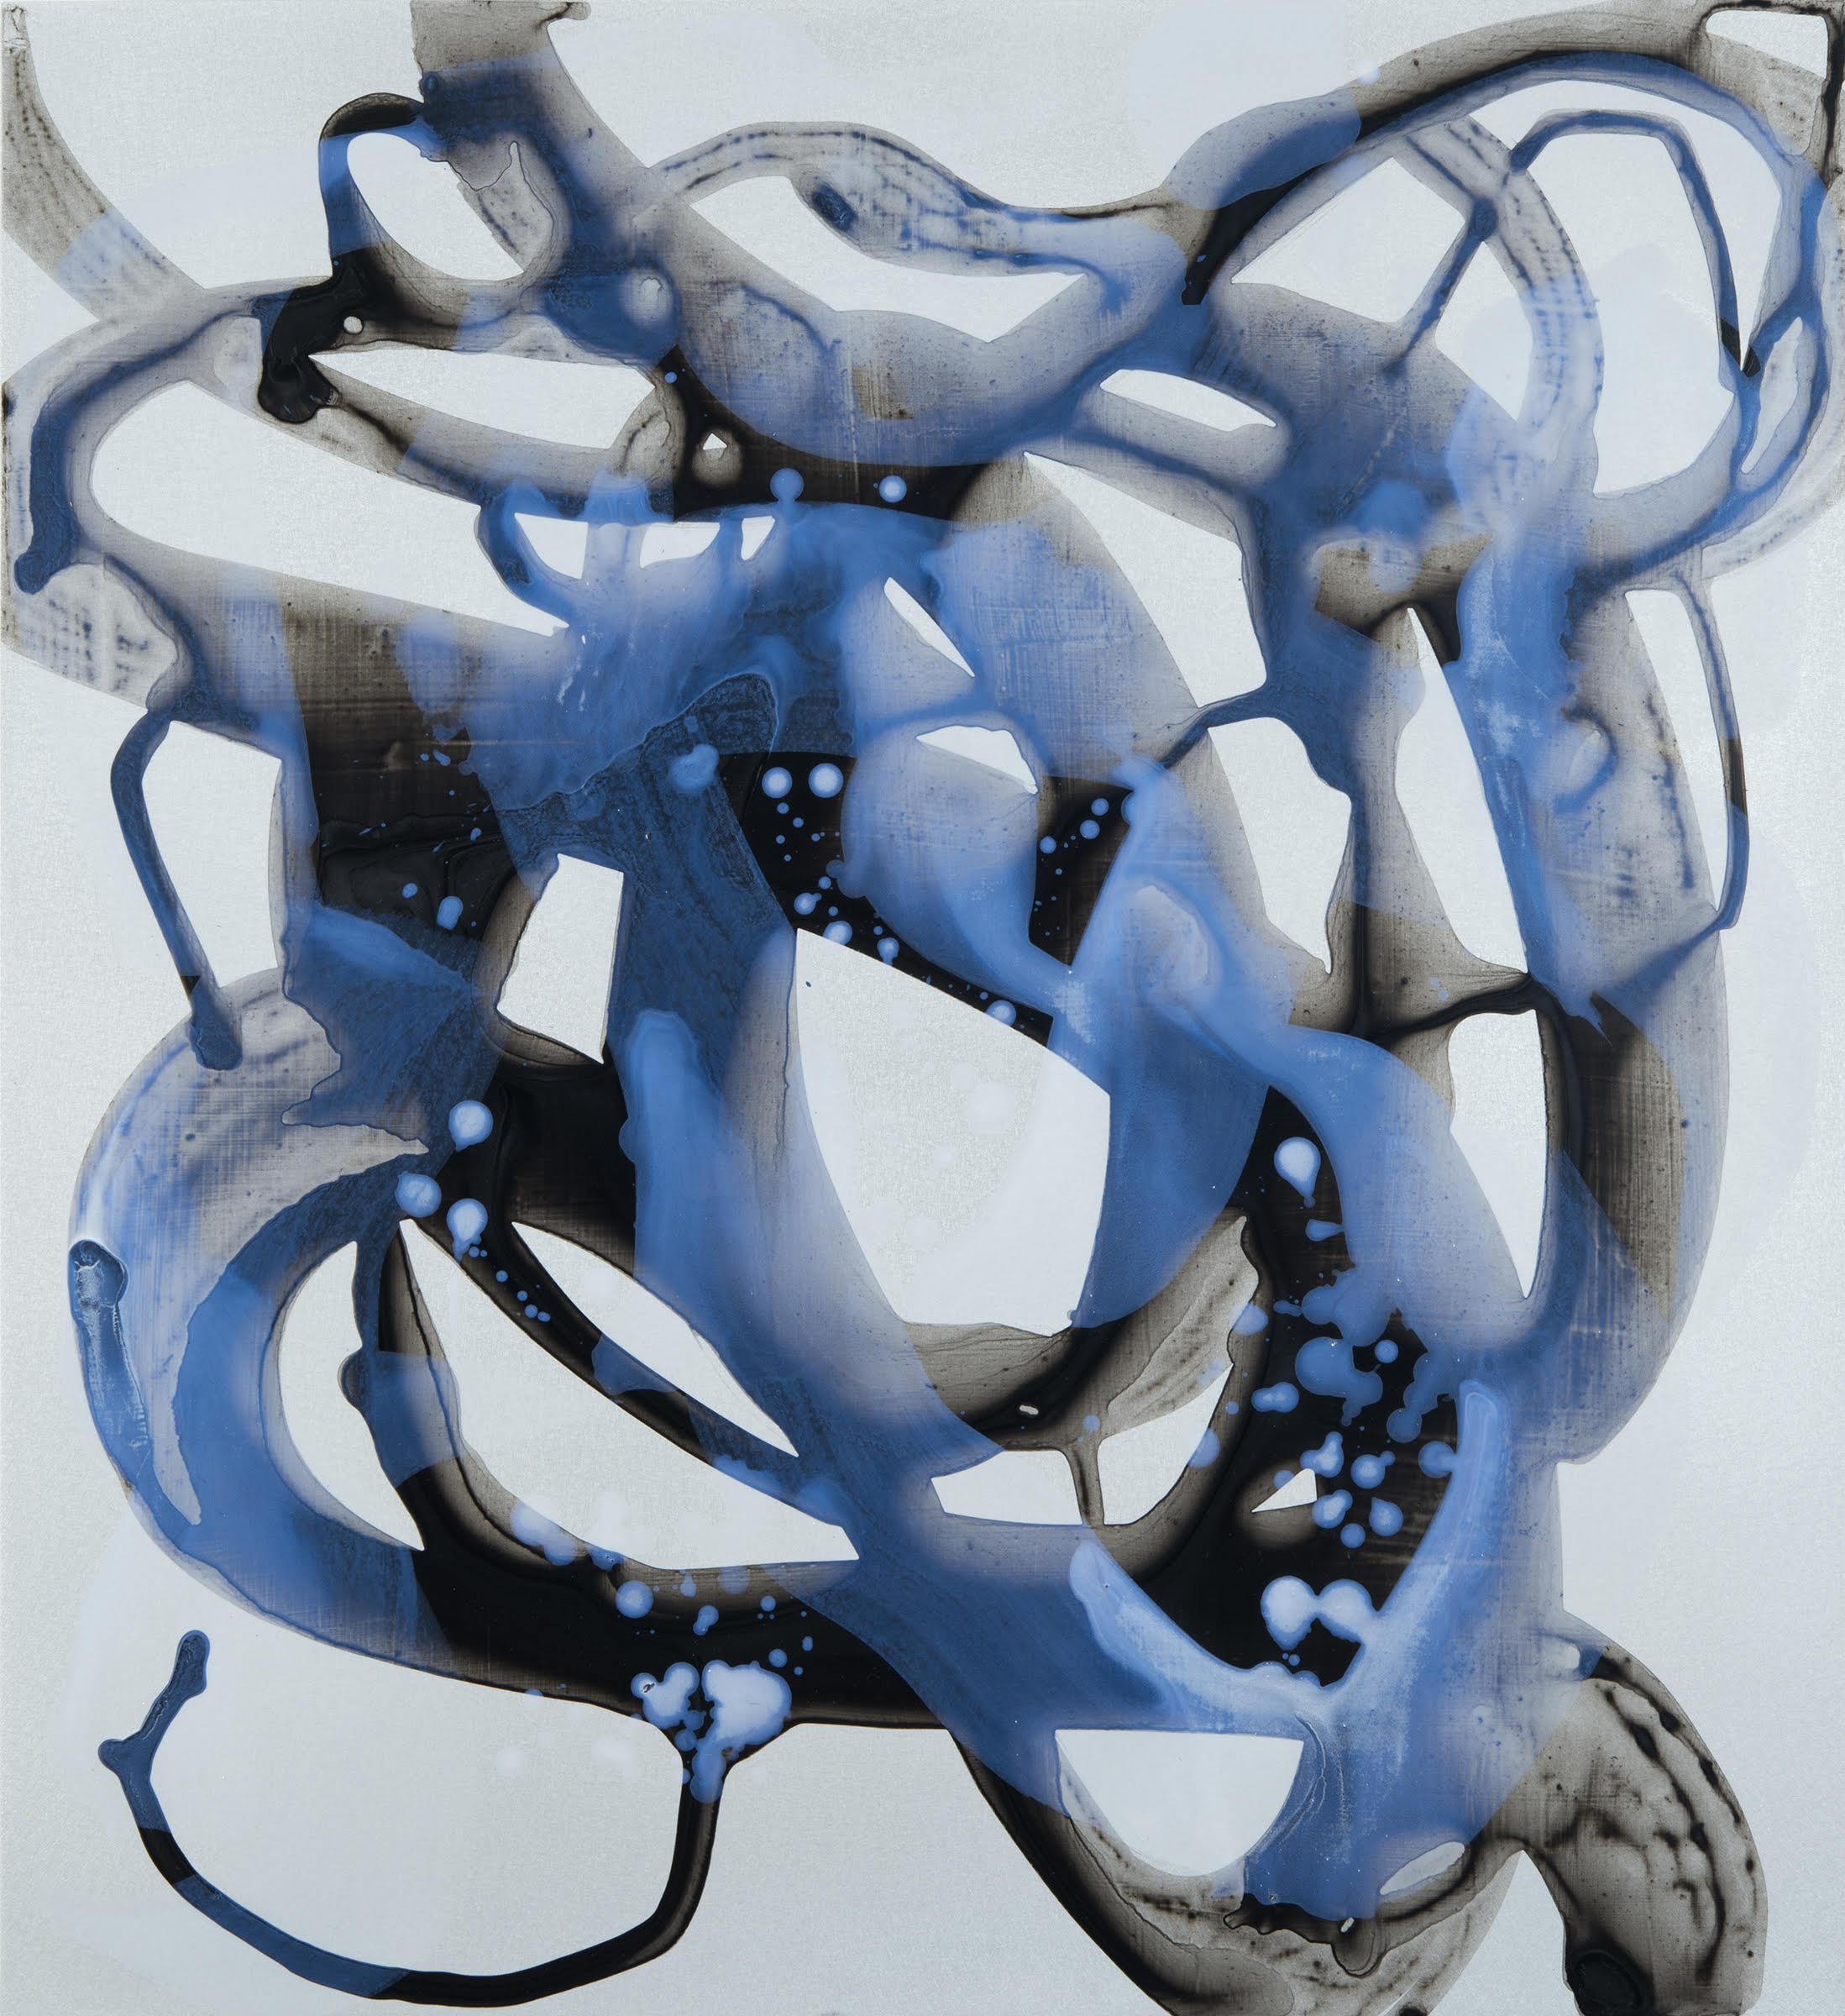 Alyce Gottesman — Carter Burden Gallery